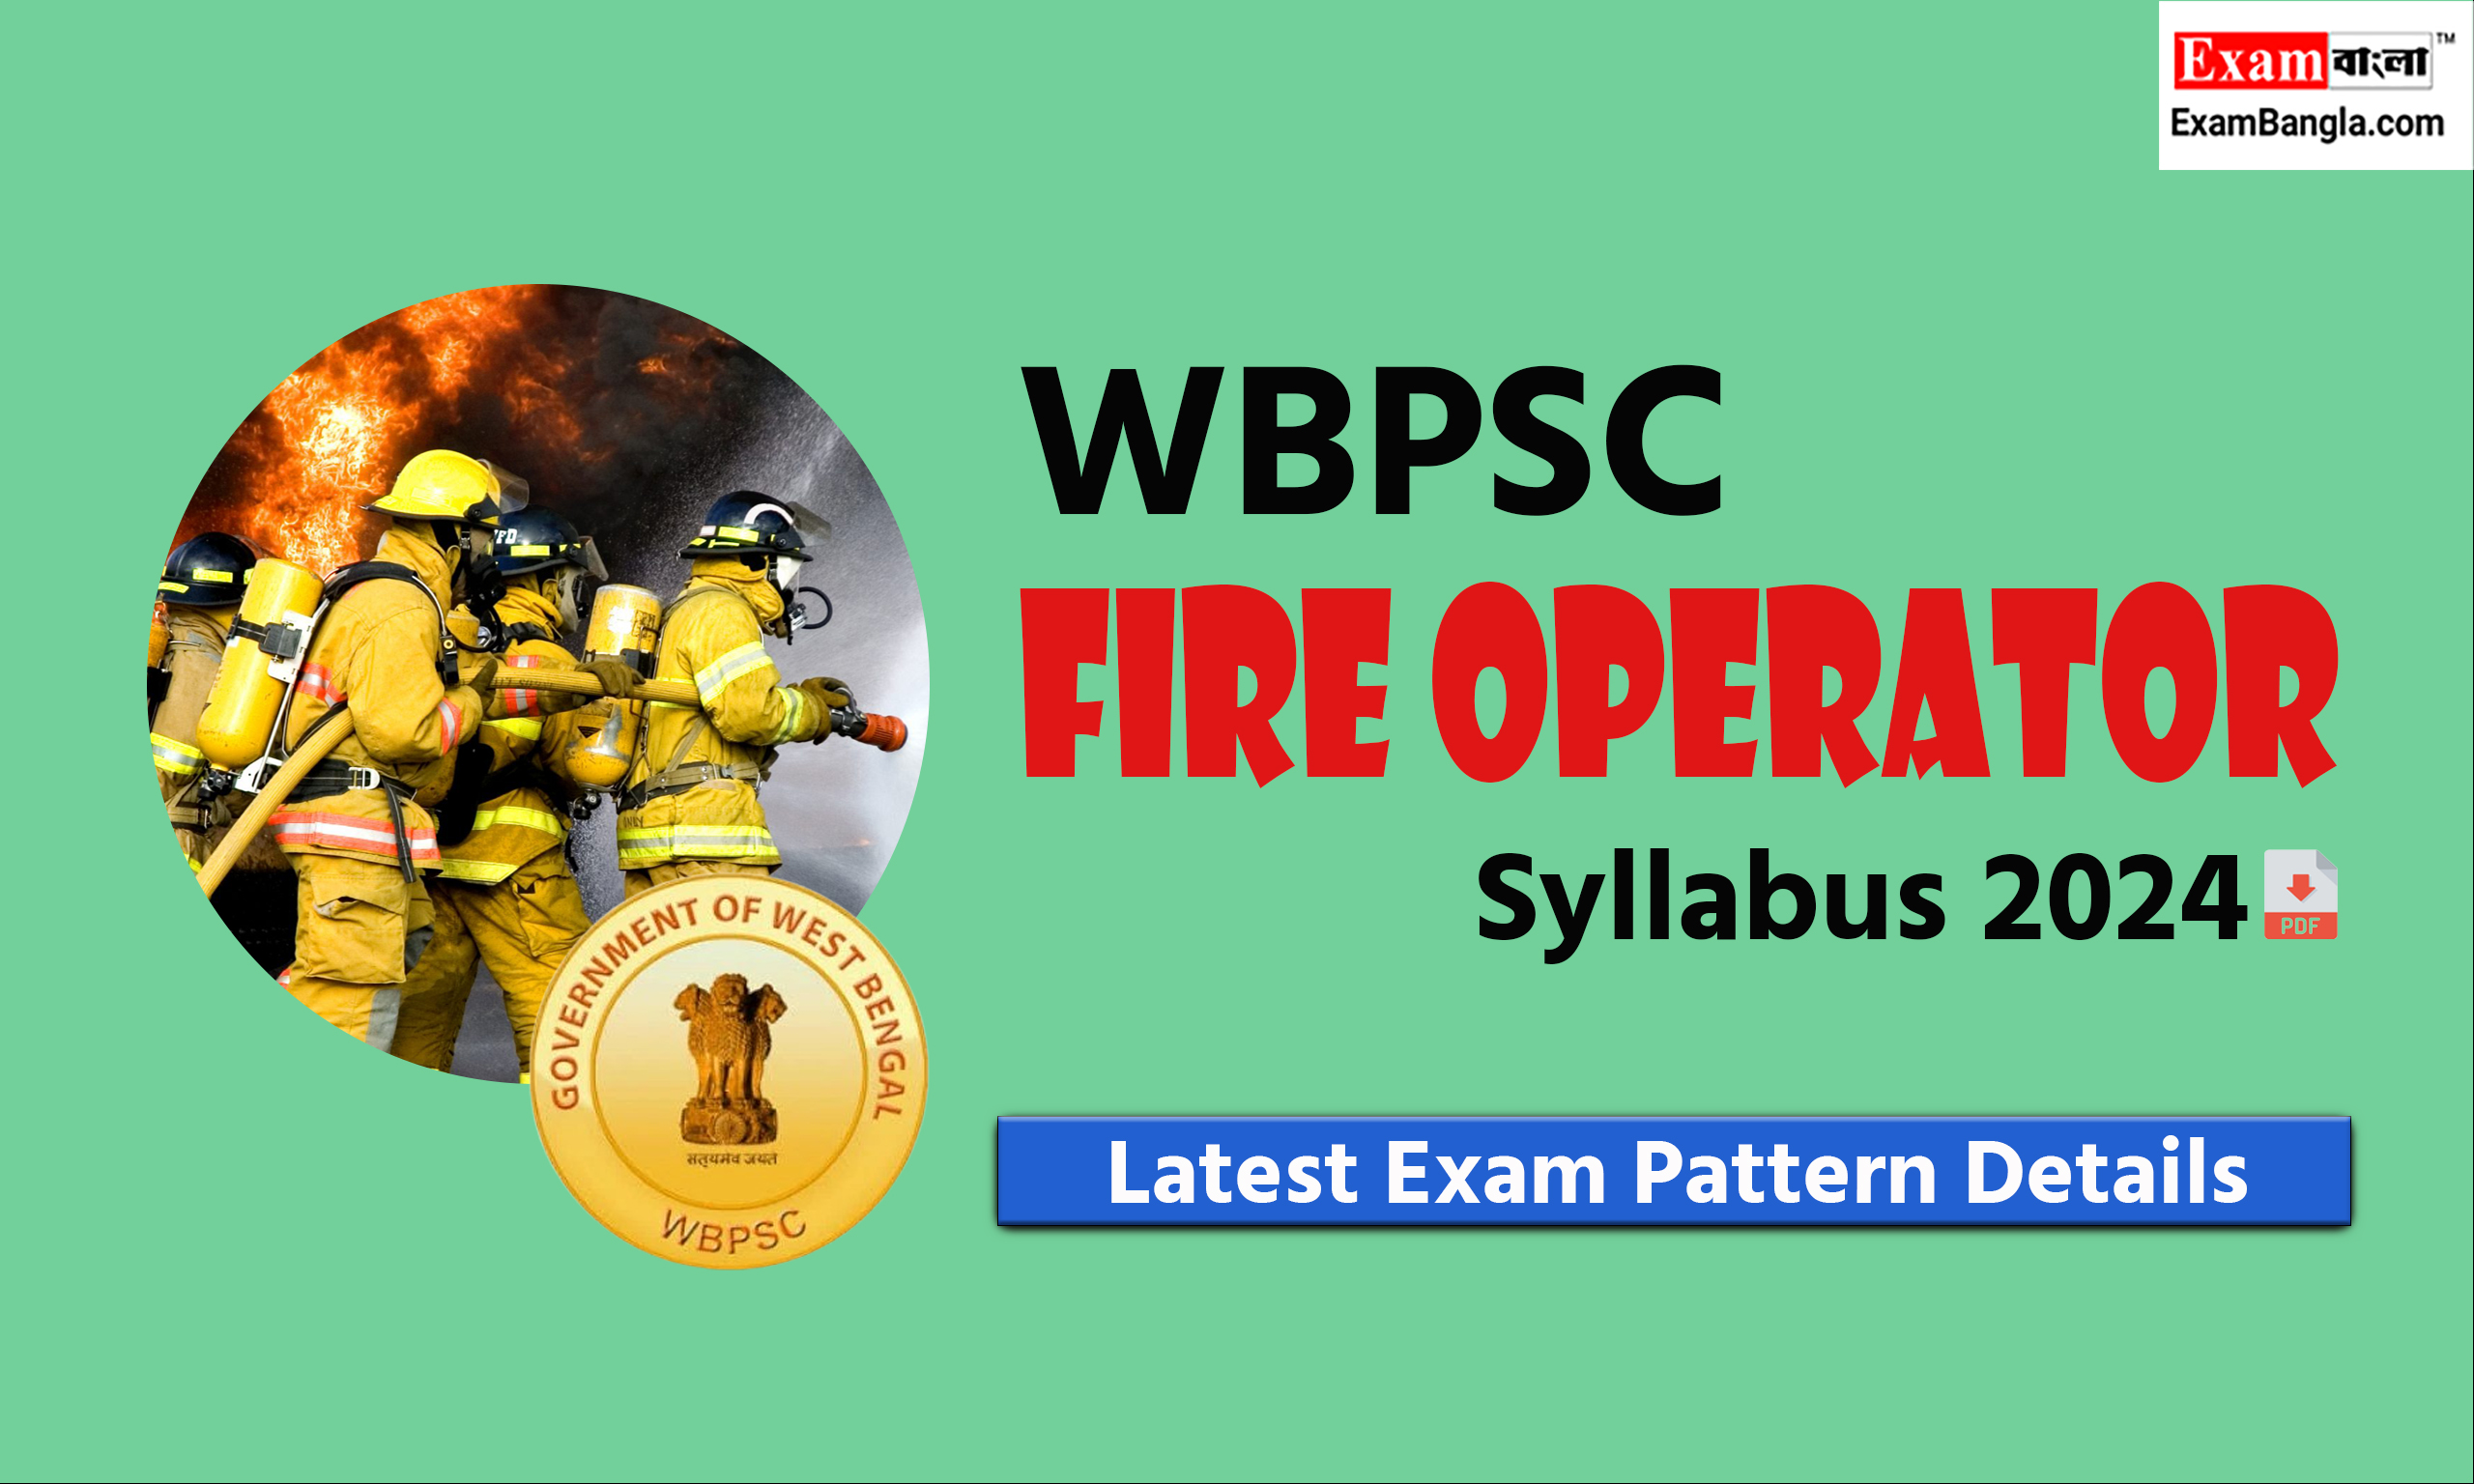 WBPSC Fire Operator Syllabus 2024 PDF